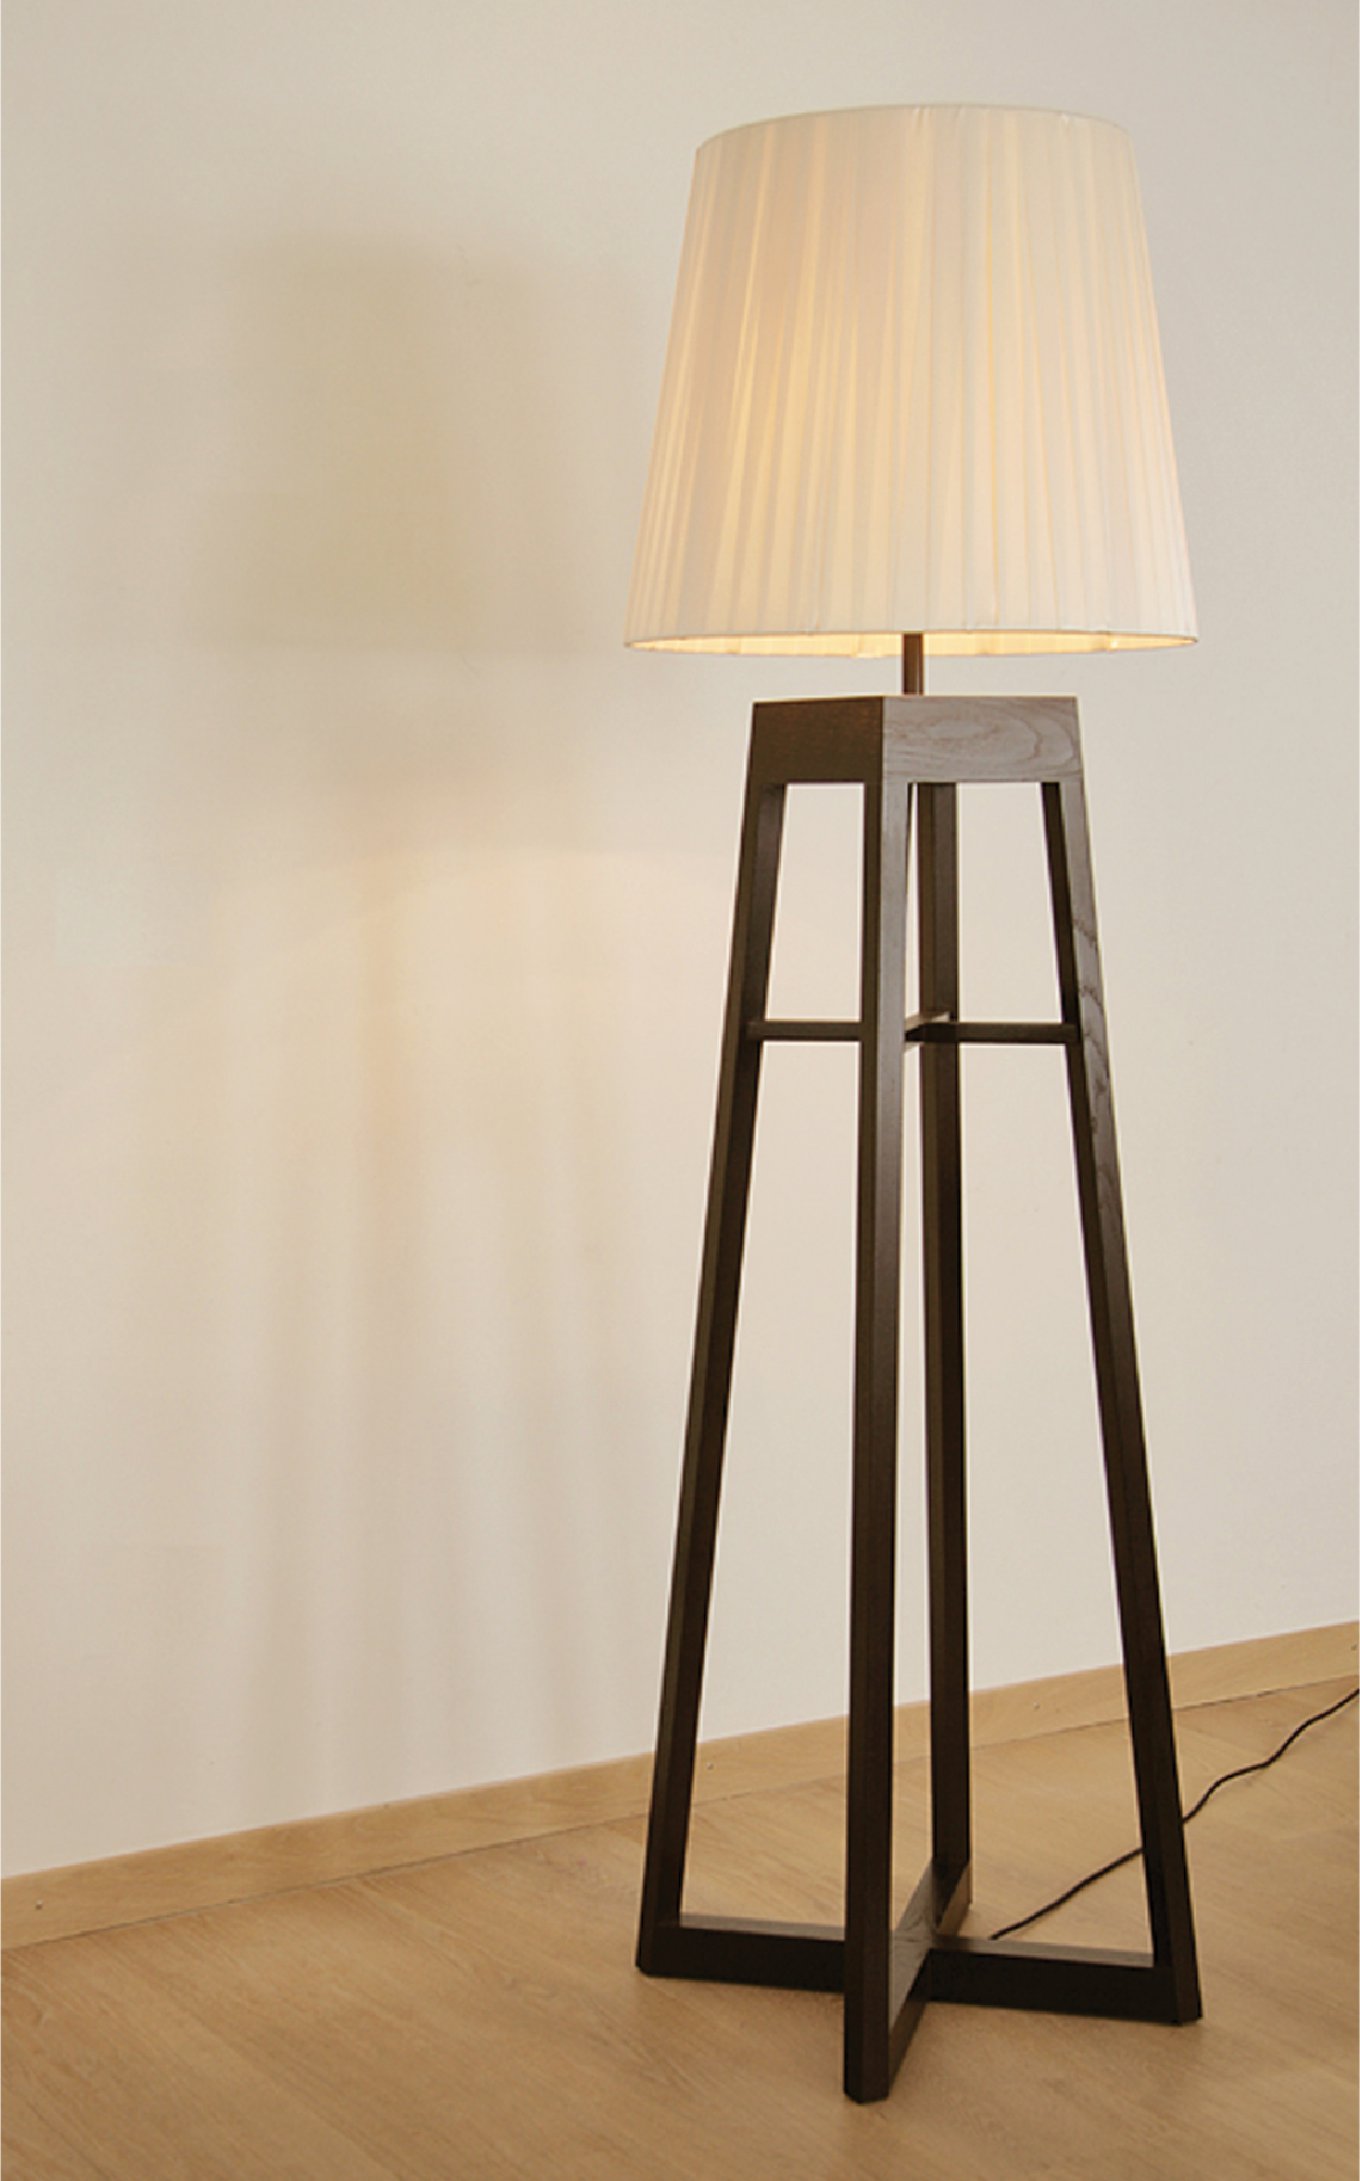 studio catoir collection design lighting marina floor lamp 2